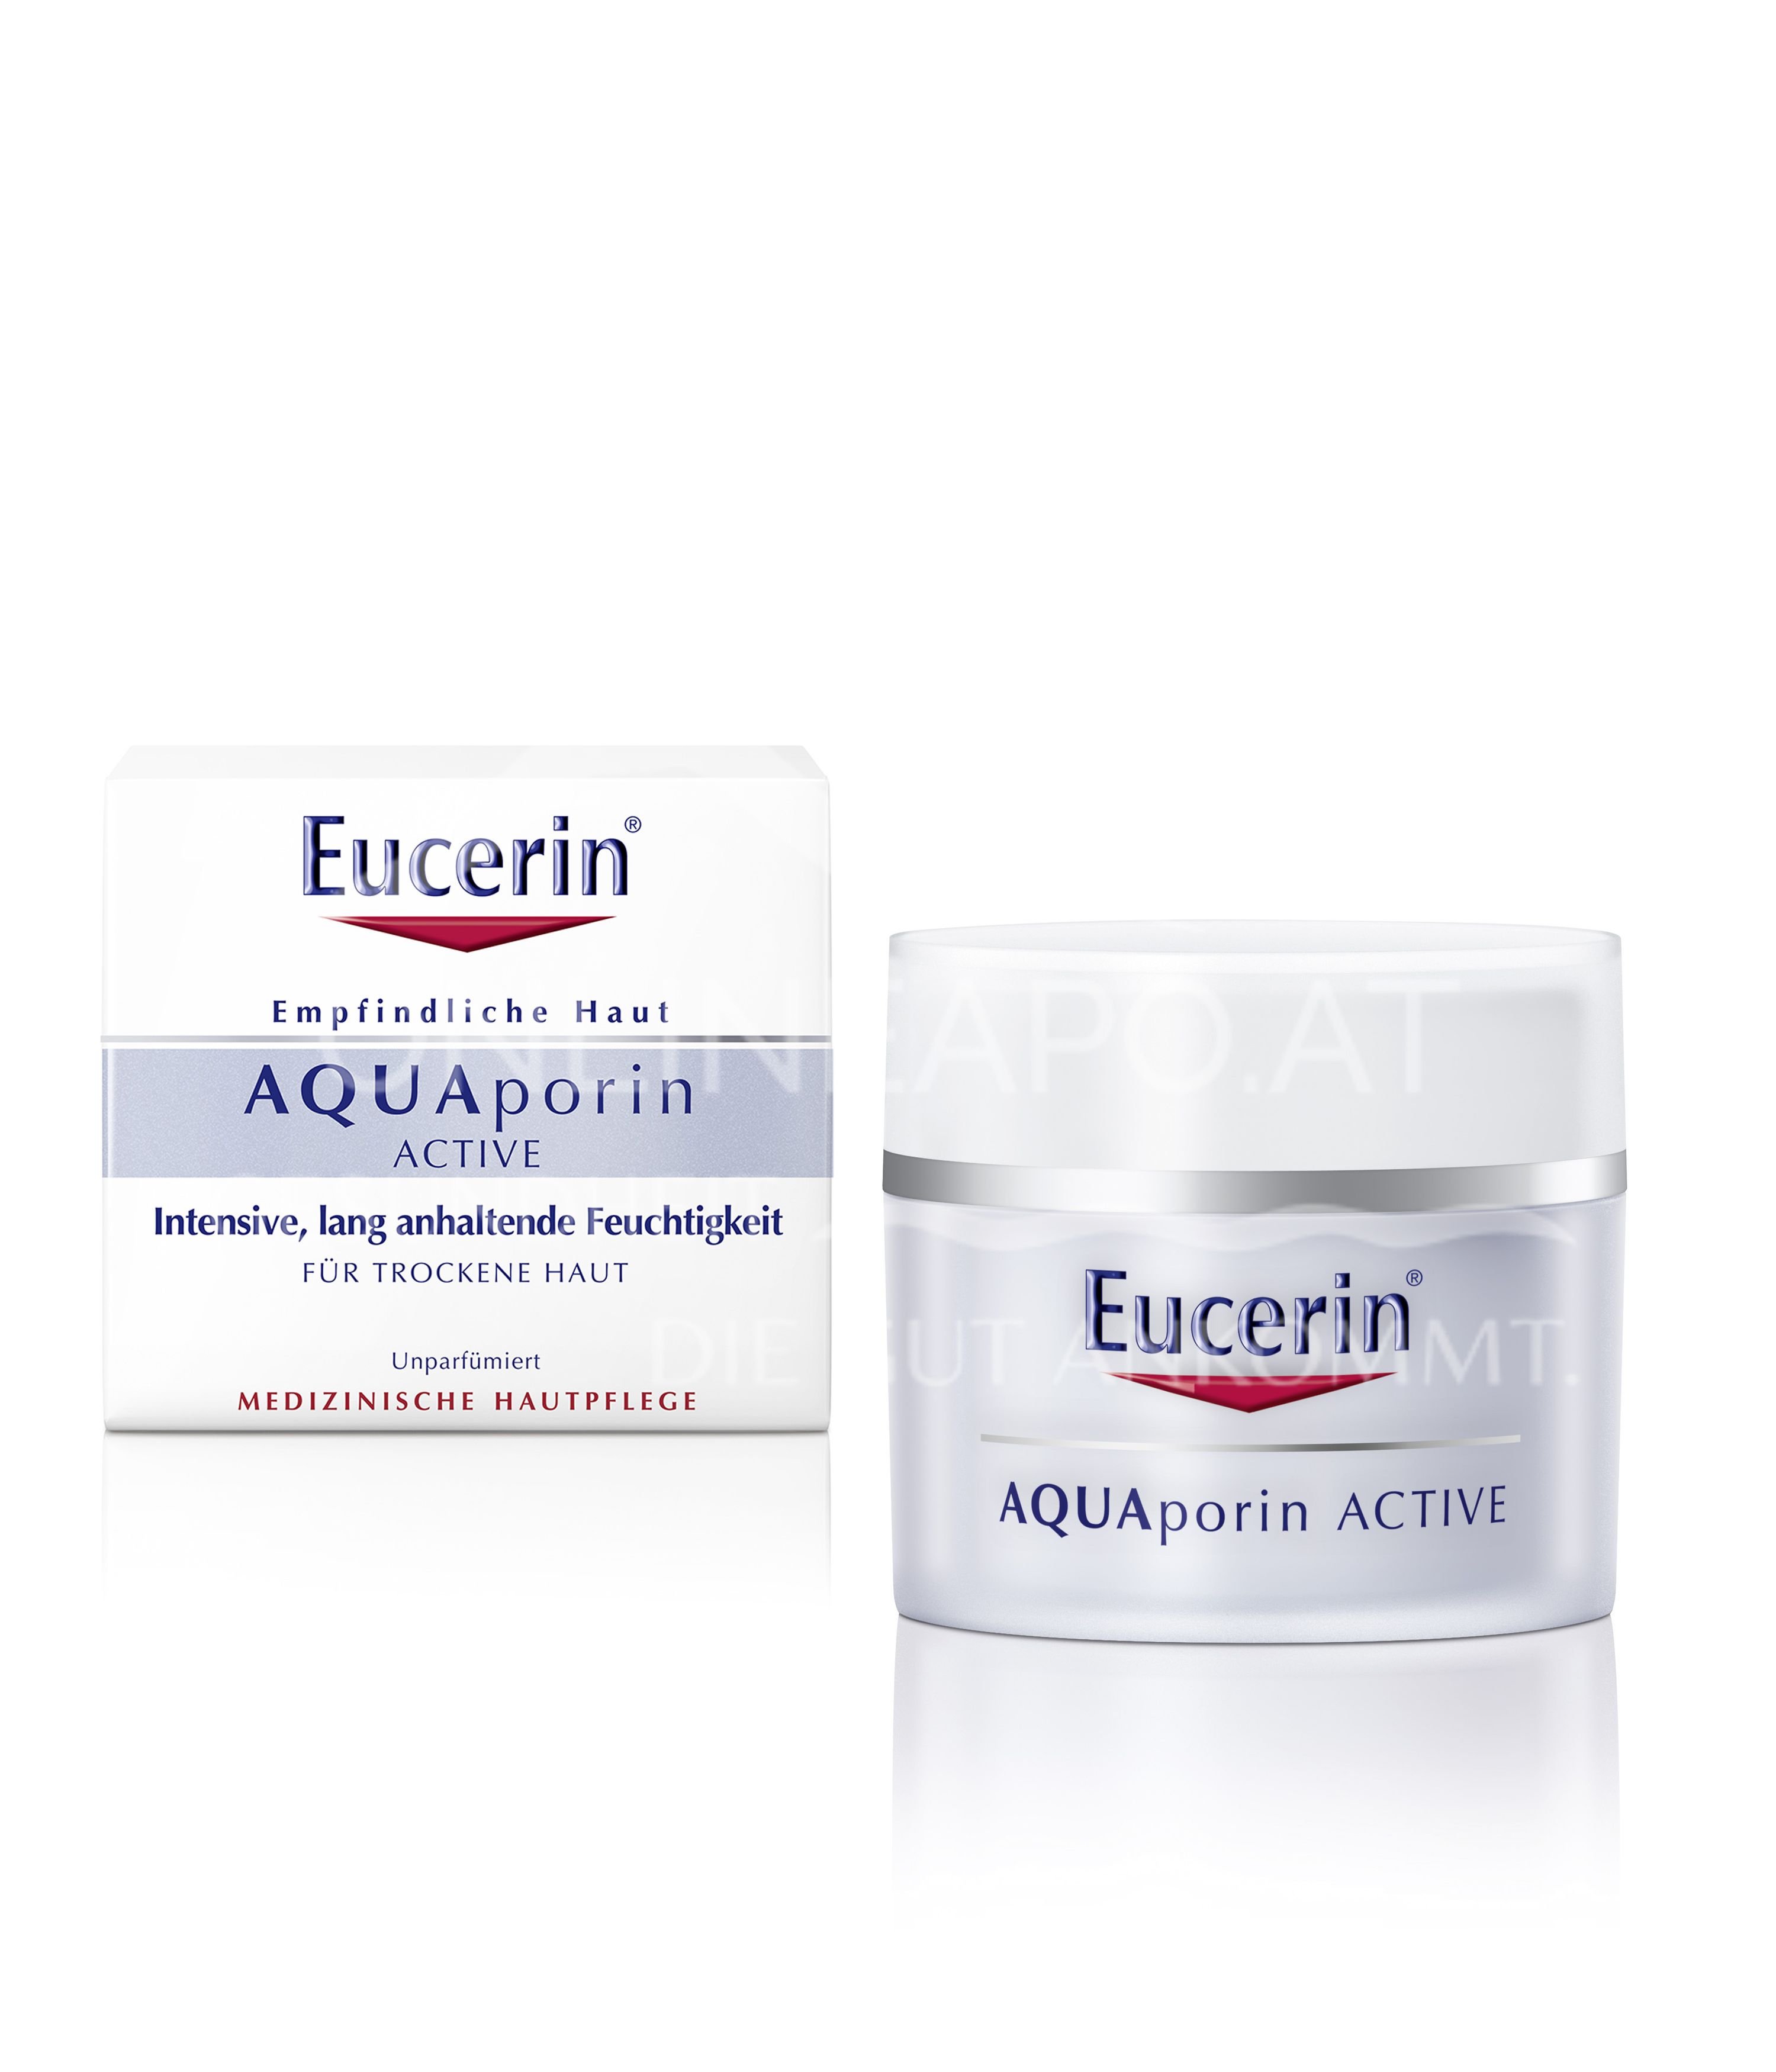 Eucerin® AQUAporin ACTIVE für trockene Haut